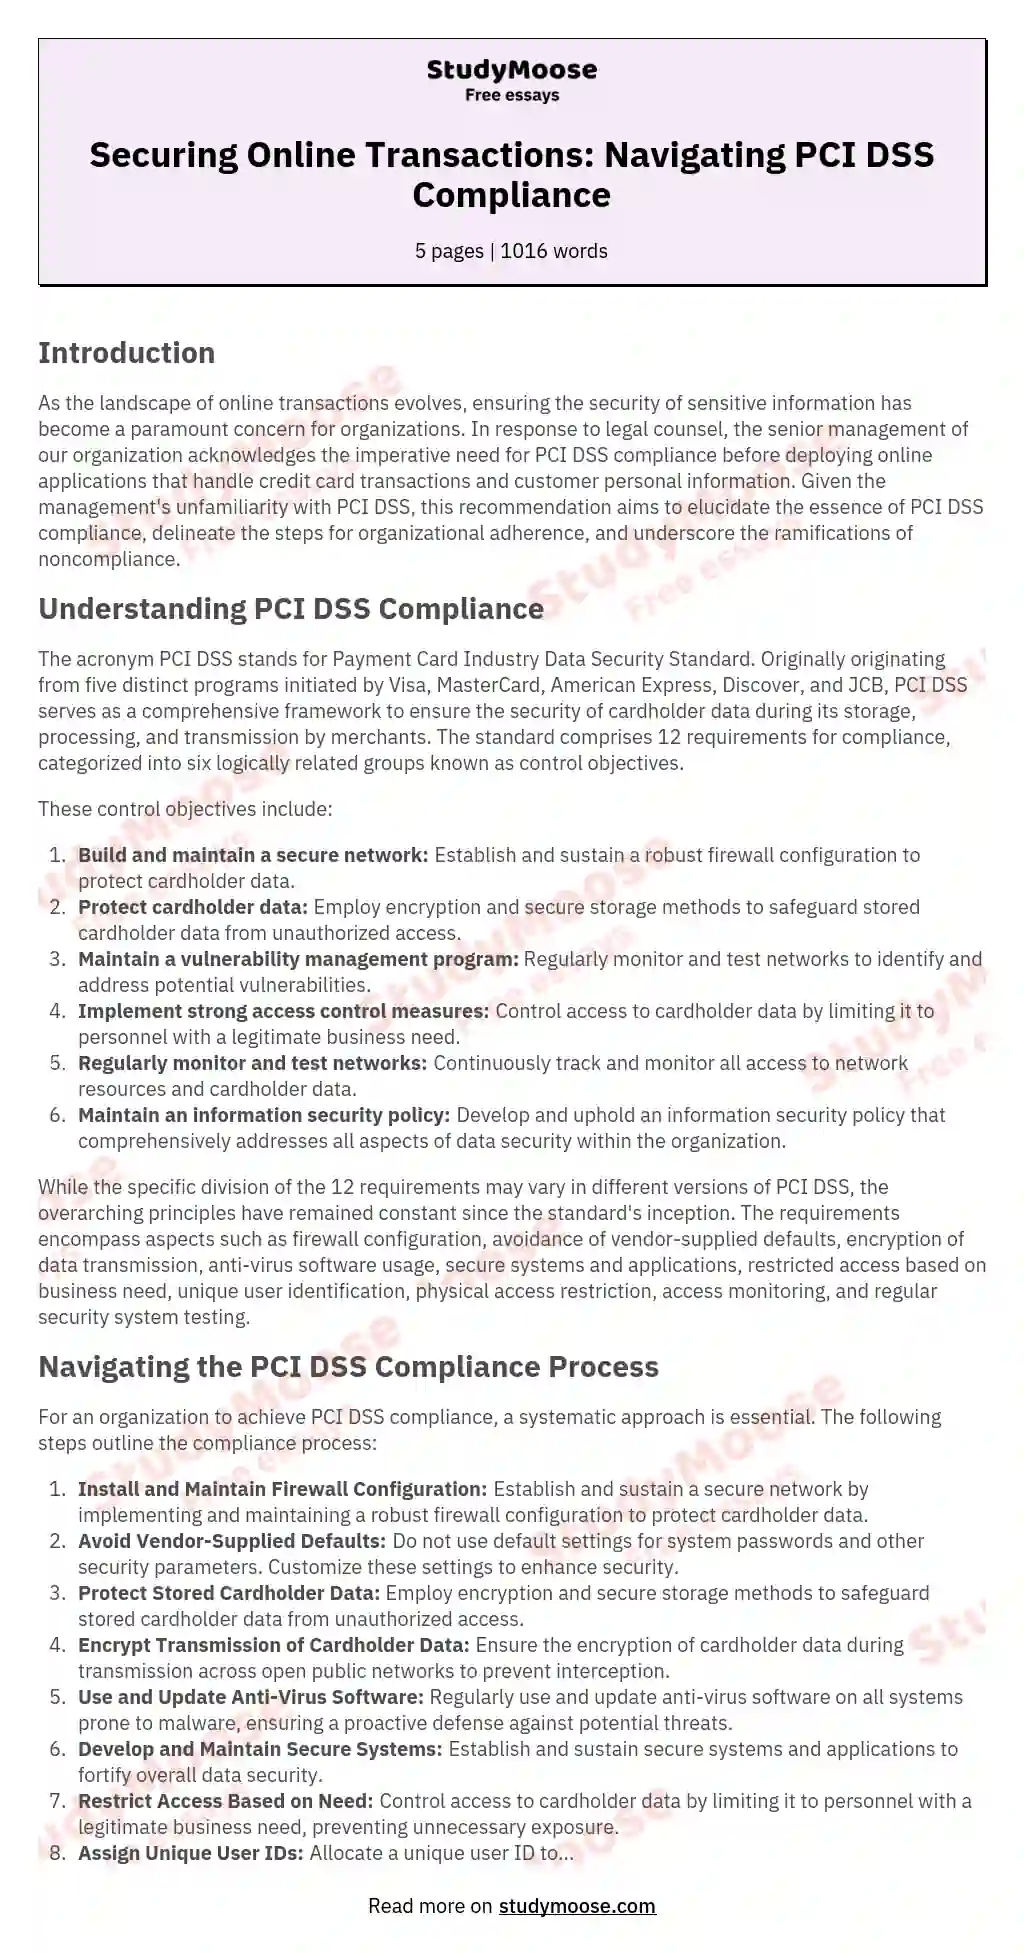 Securing Online Transactions: Navigating PCI DSS Compliance essay